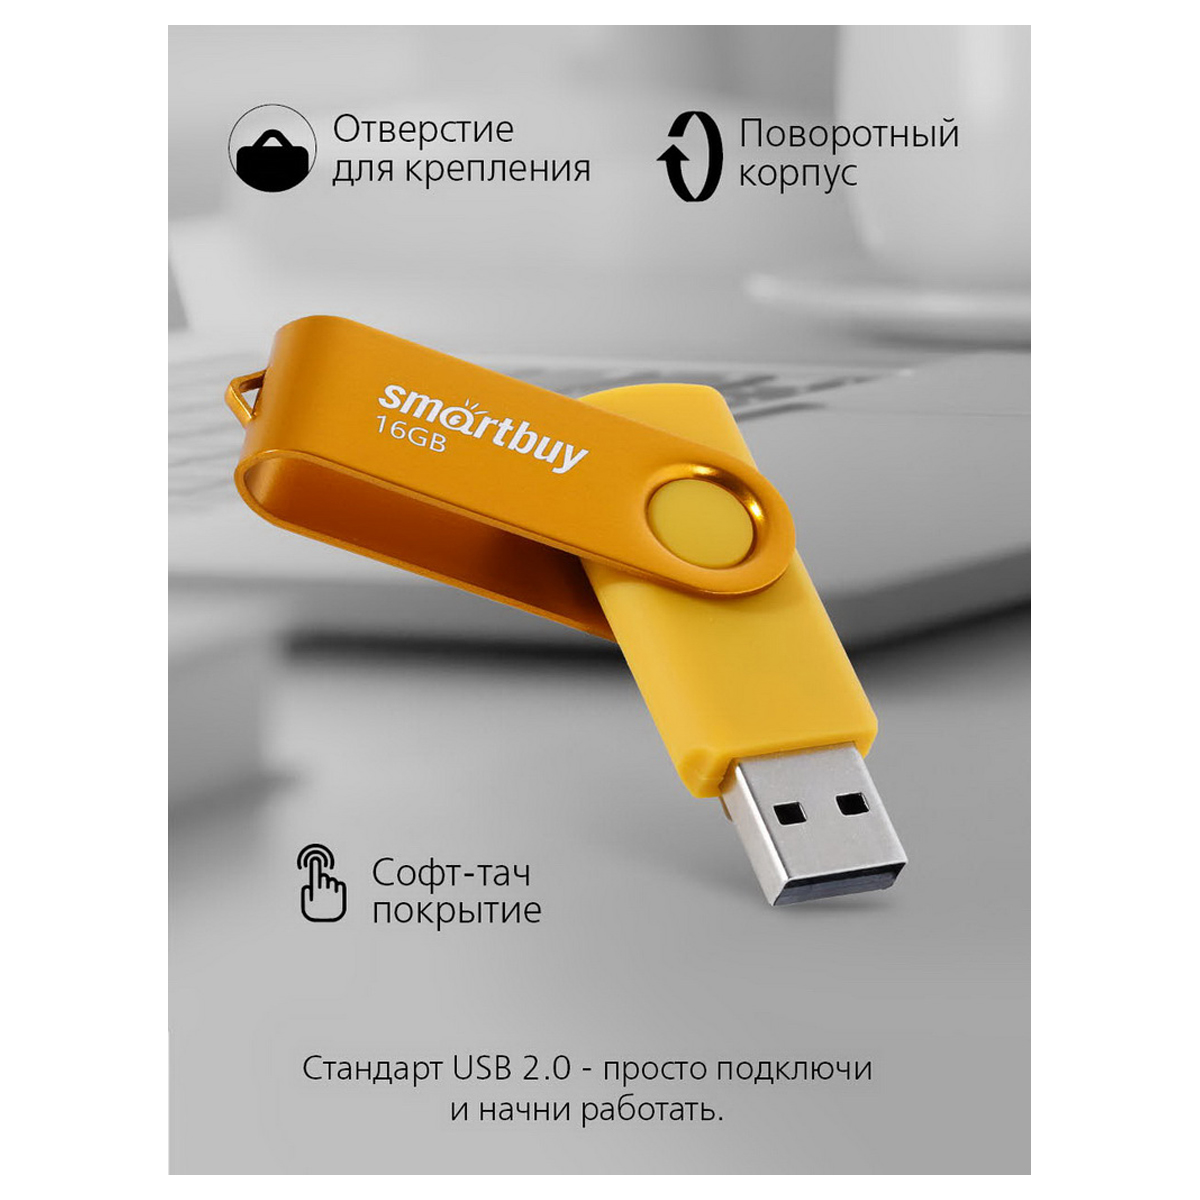 Память Smart Buy "Twist" 16GB, USB 2.0 Flash Drive, желтый